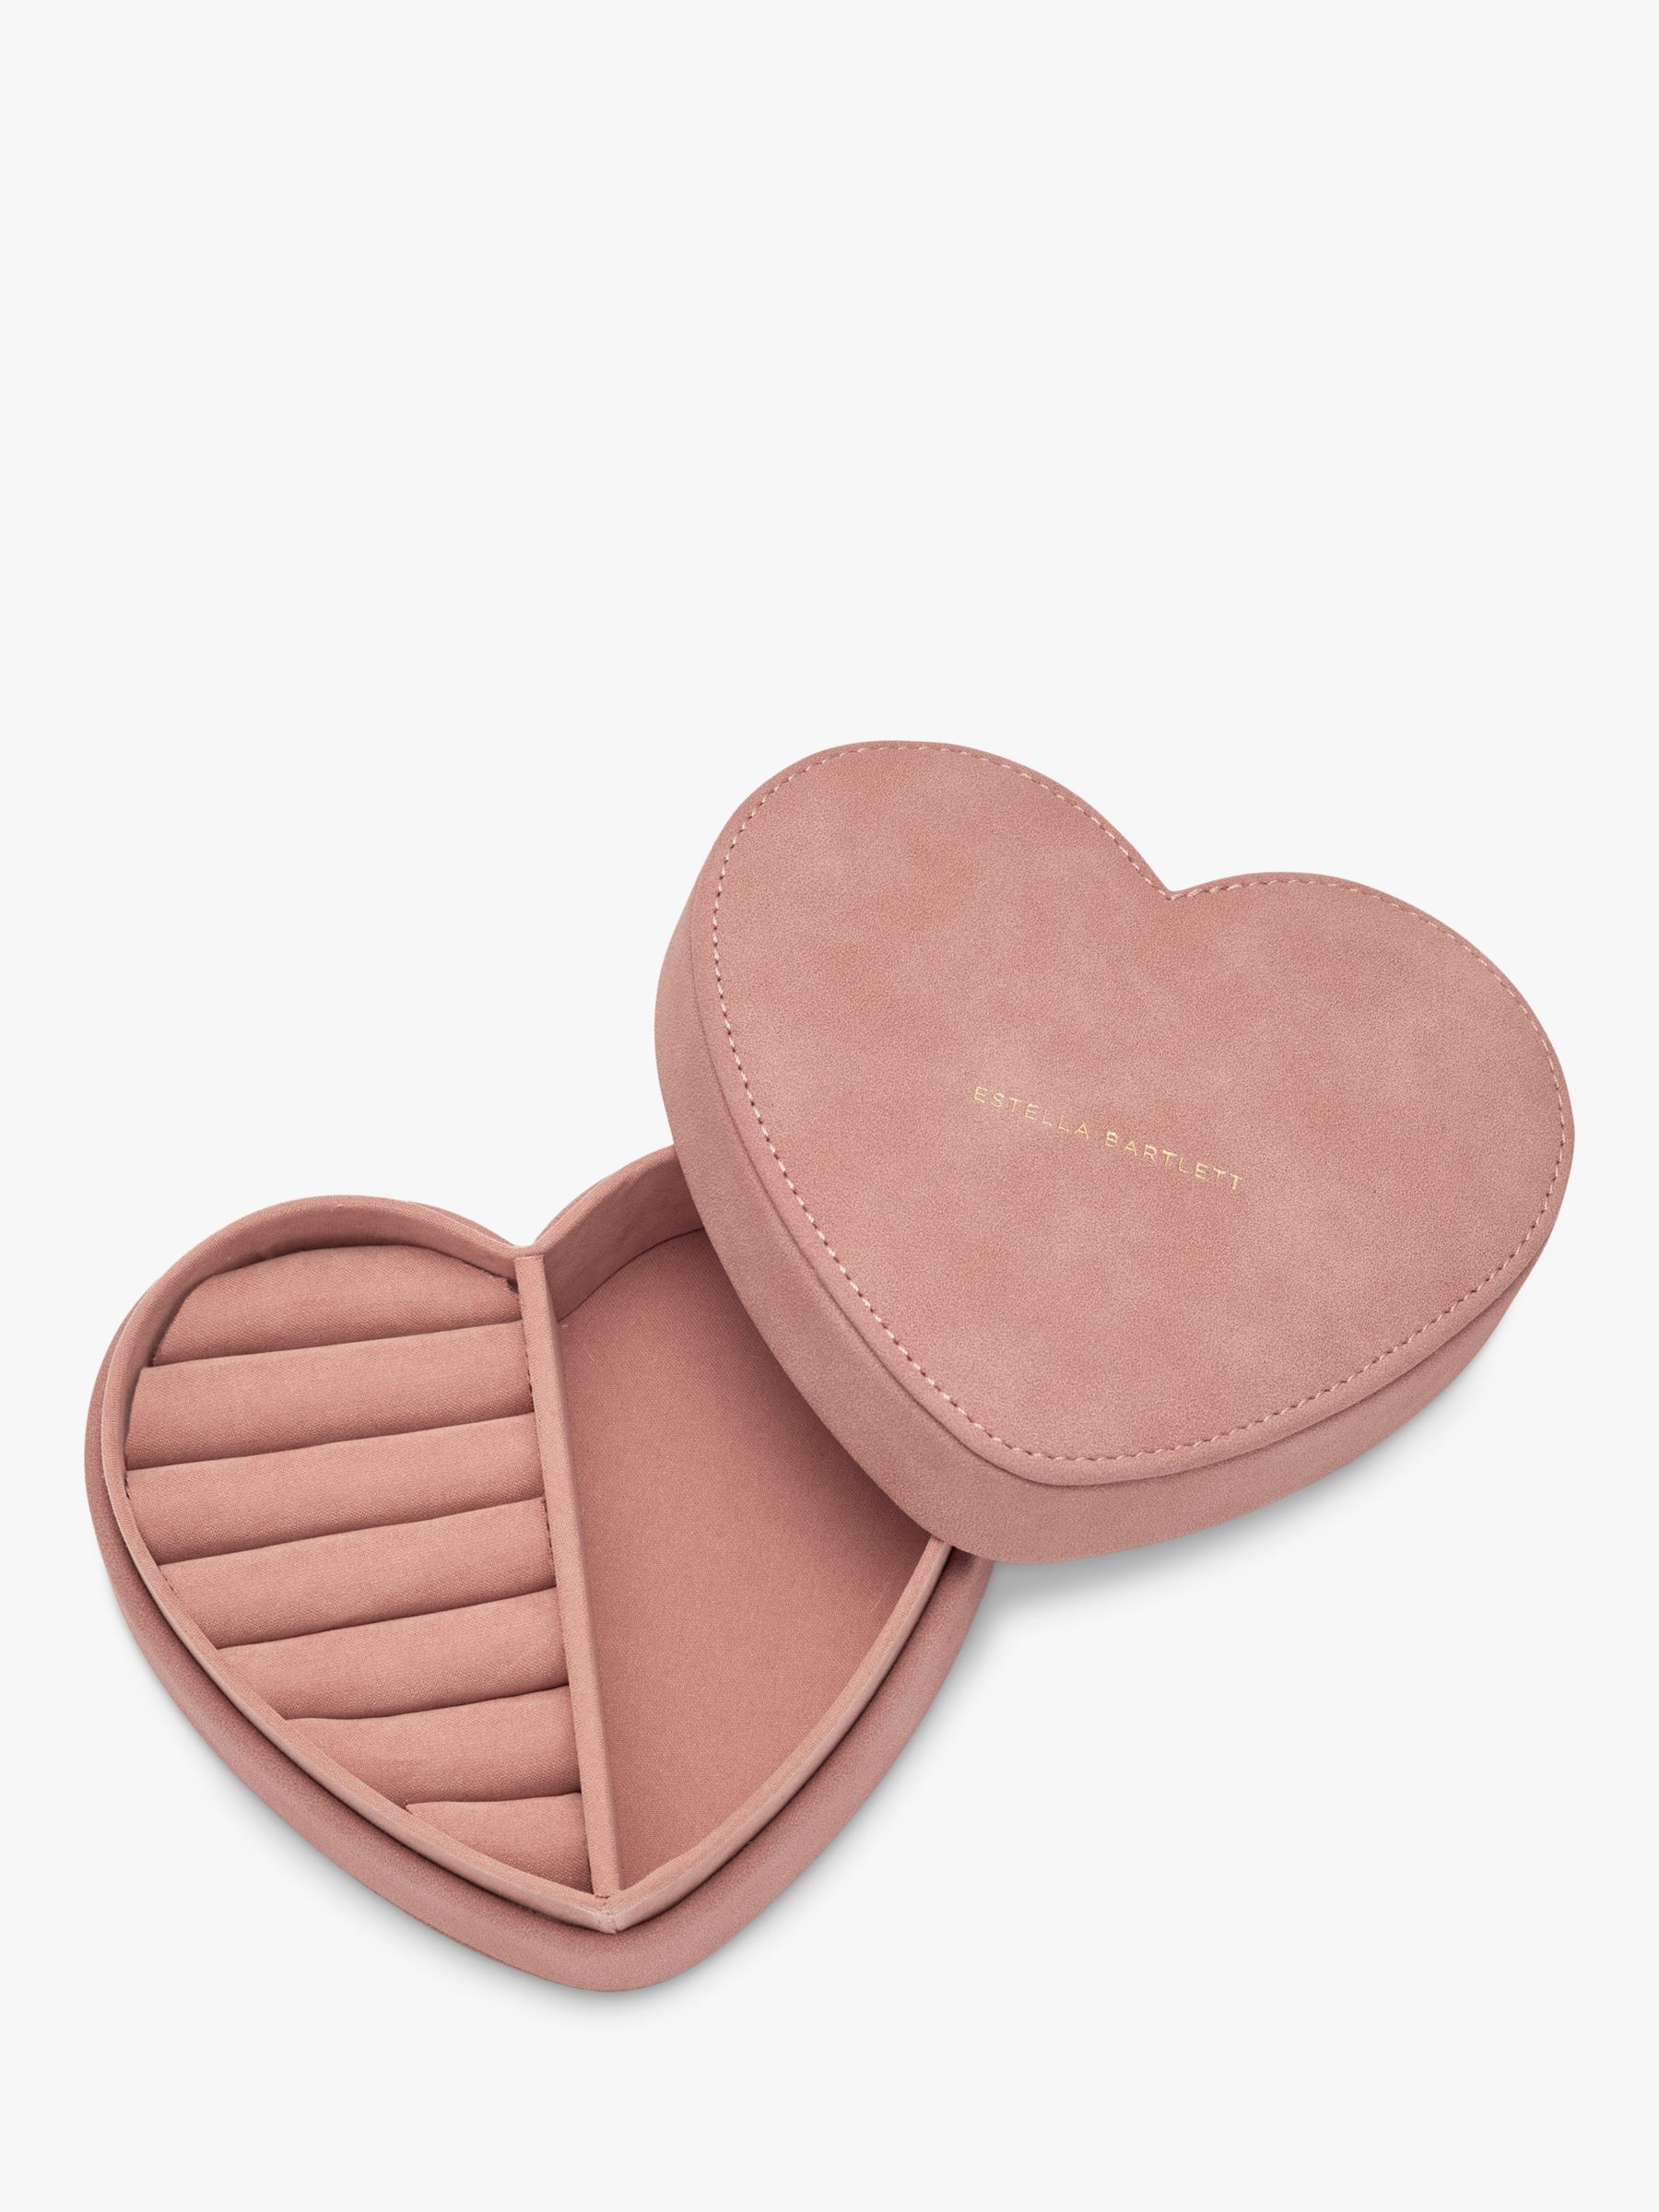 Estella Bartlett Heart Shape Jewellery Box, Pink